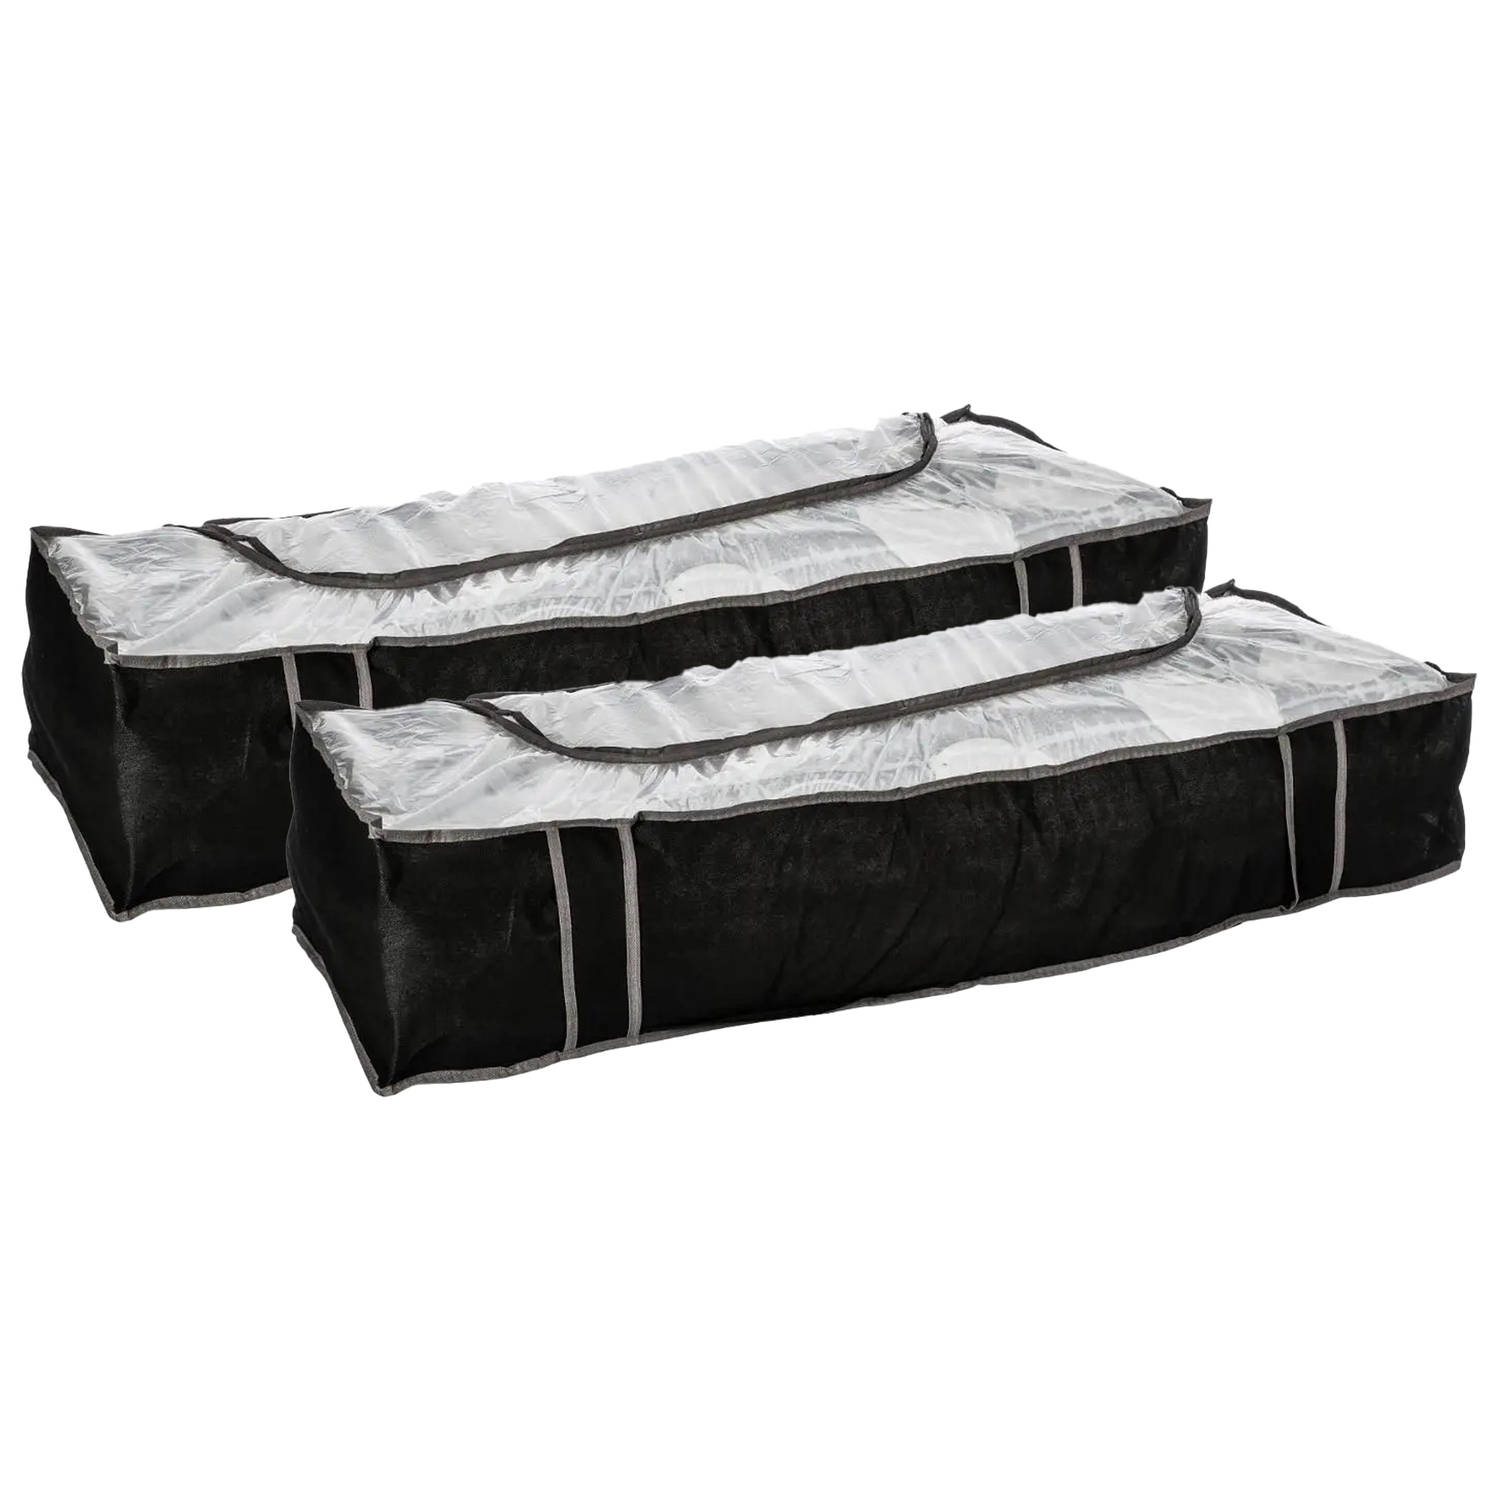 5Five Opberghoes-beschermhoes dekens en kussens 2x zwart-grijs 100 x 45 x 20 cm Opberghoezen